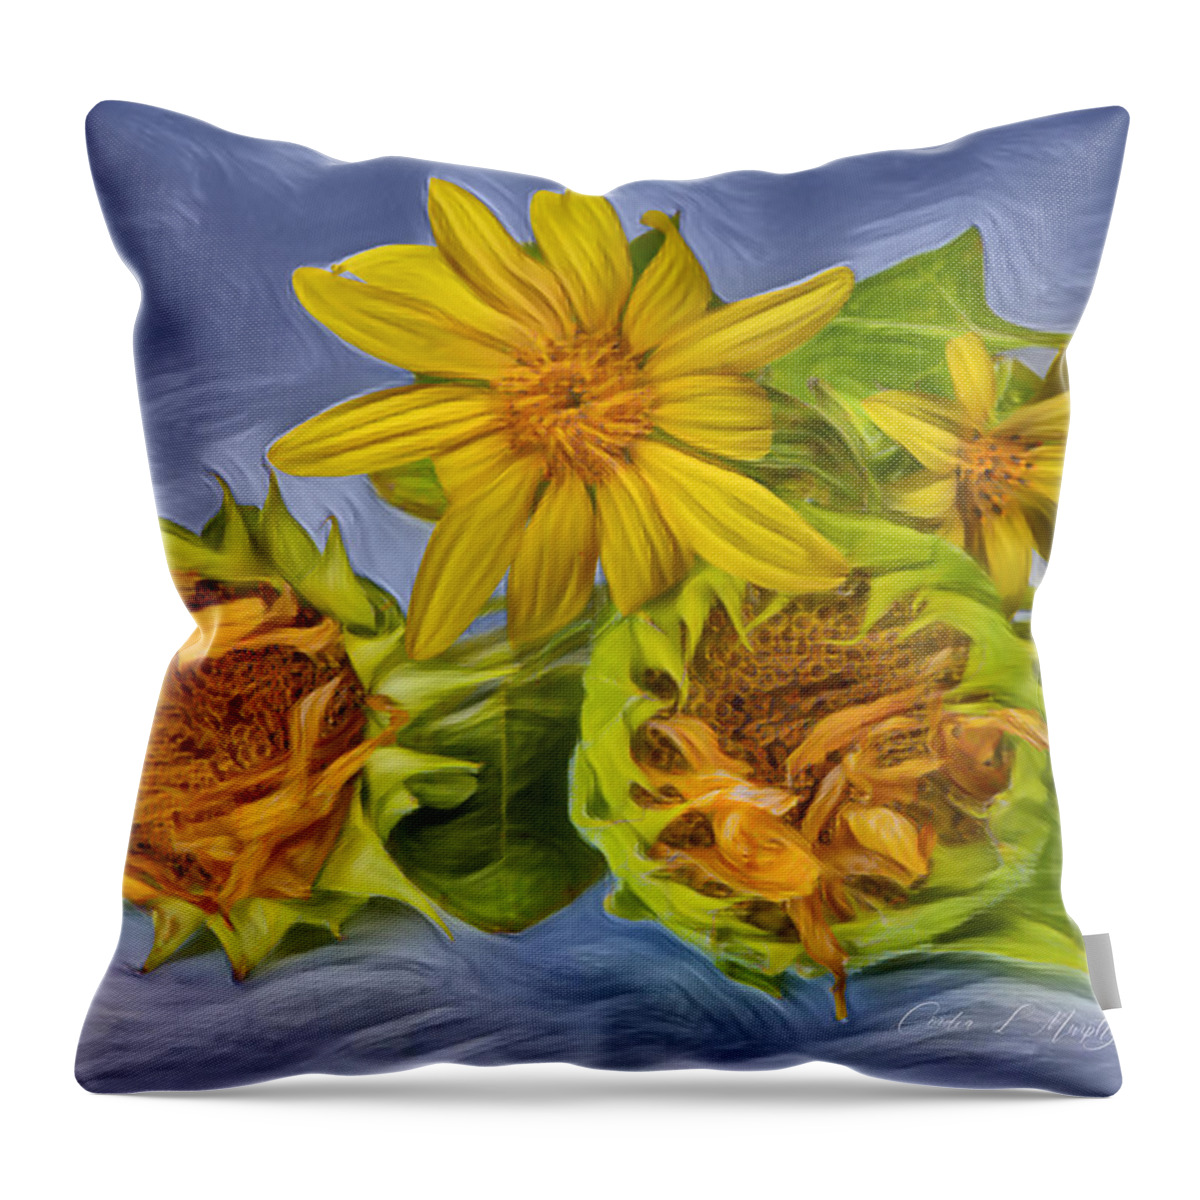 Sunflowers Throw Pillow featuring the digital art Sunflower Grown From Seeds by Cordia Murphy